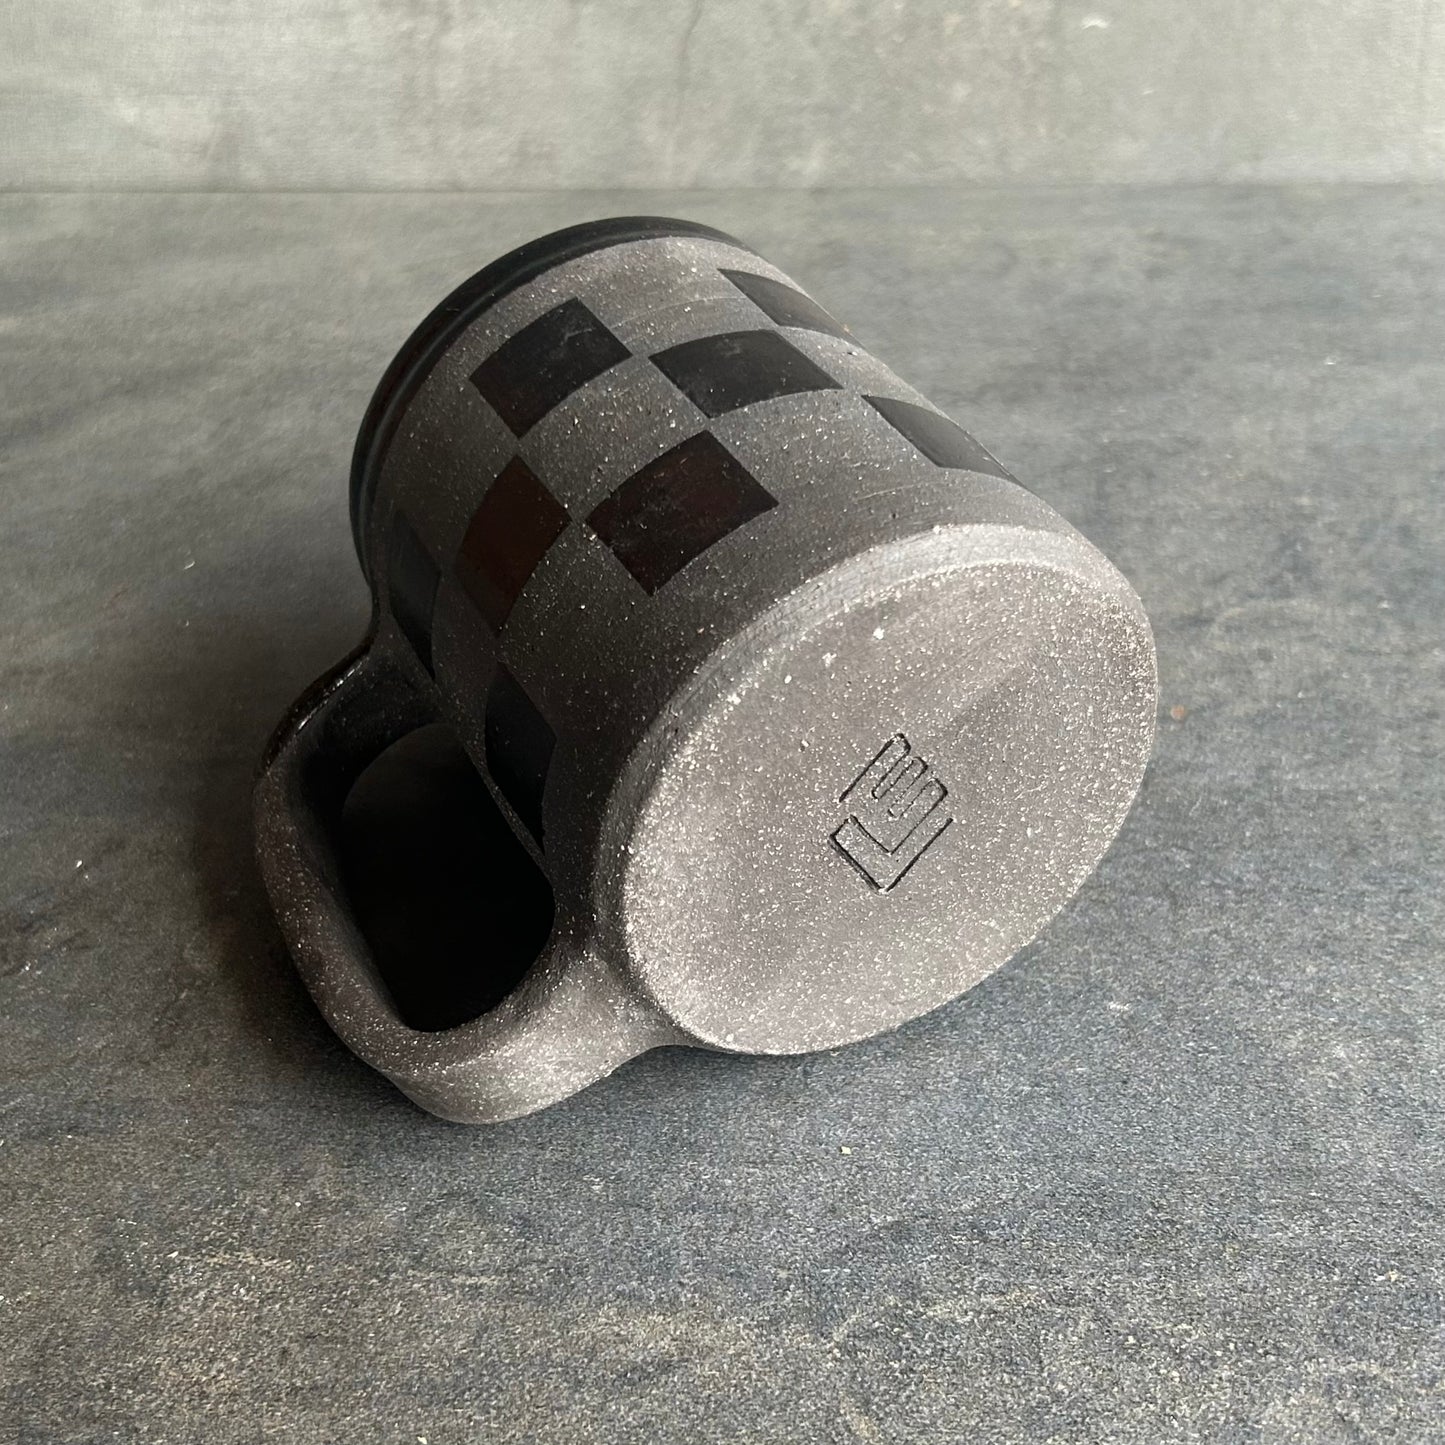 Checkerboard Mug - Matte Black / Black